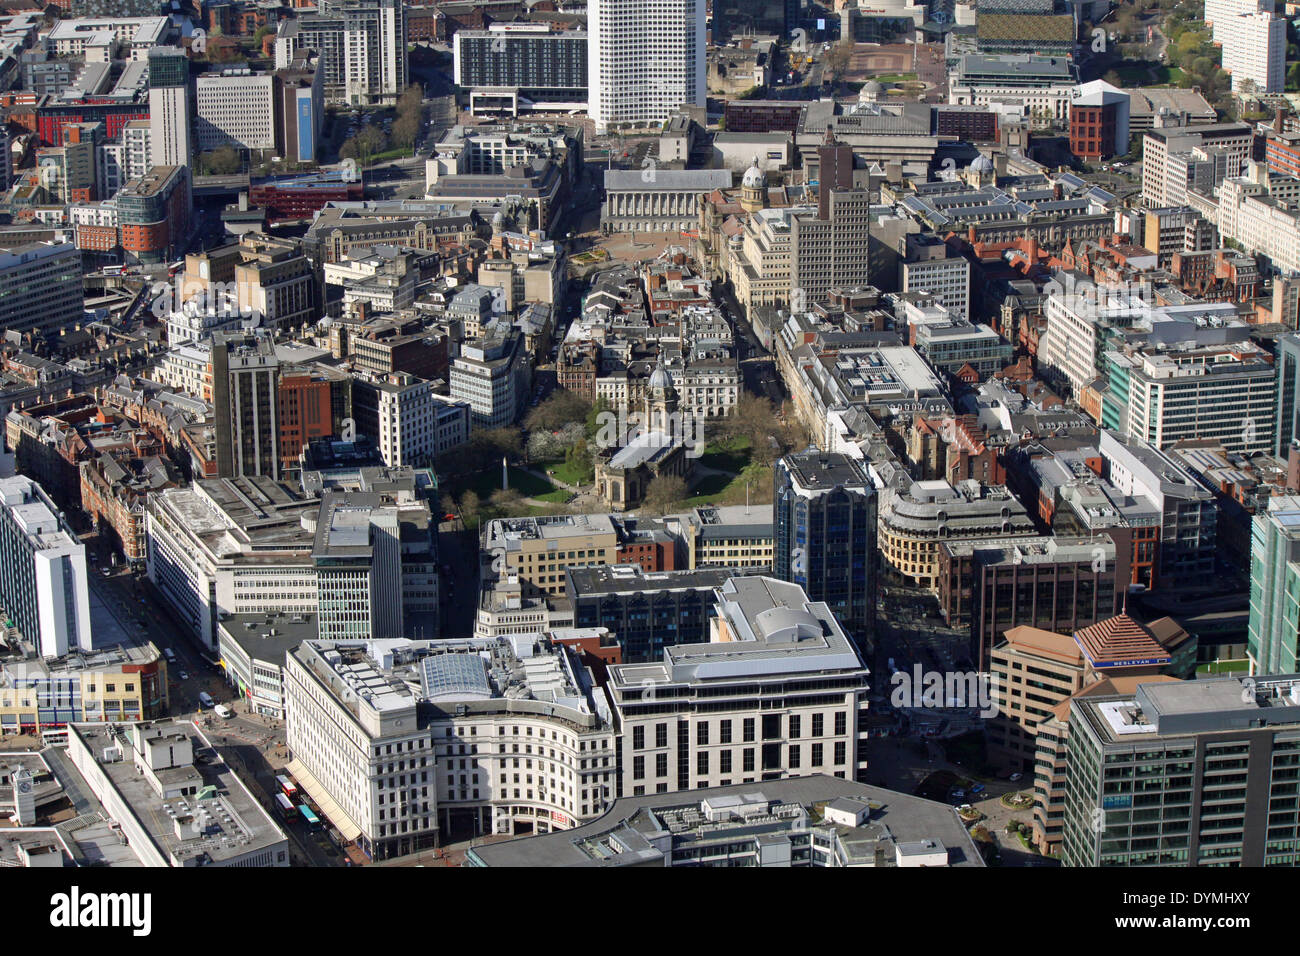 Luftaufnahme der Great Western Arcade, Shopping Centre, Birmingham Blick auf Temple Row & The Minories Road in Richtung St Philip's Cathedral Stockfoto